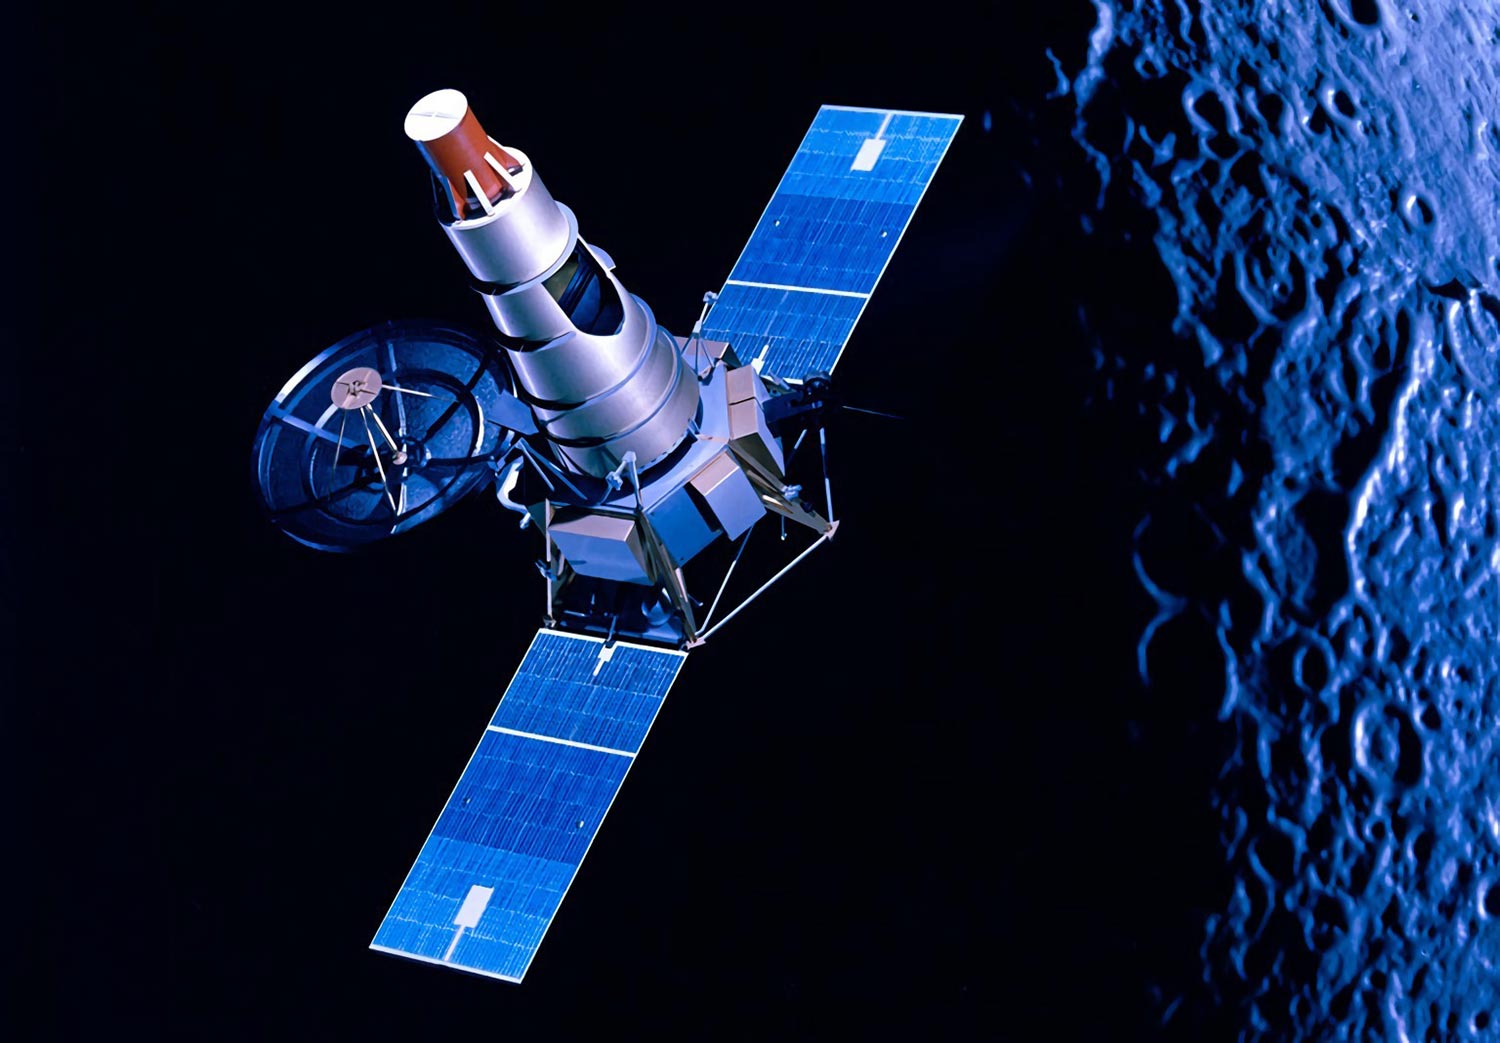 NASA's Ranger Spacecraft Approaching the Moon